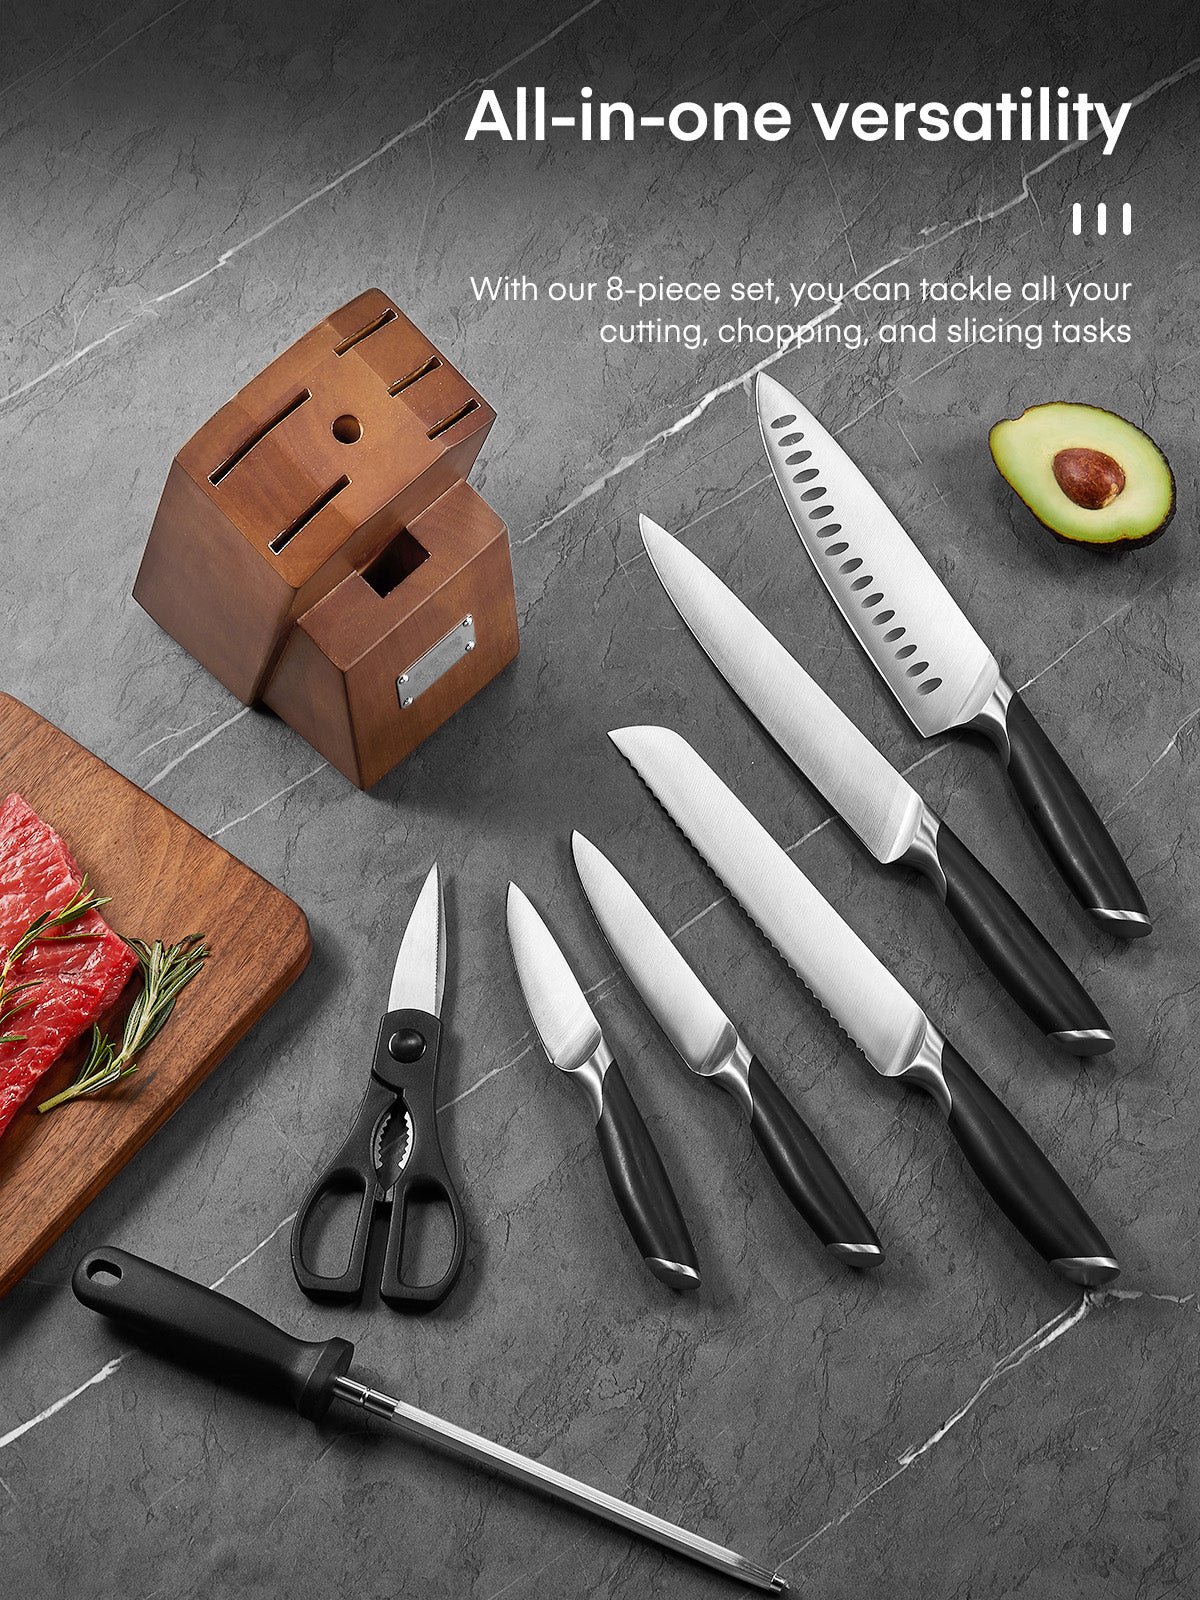 Knife Set, 8-Piece Premium Knife Block Set with High Carbon German Steel, 5 Knives, Sharpening Steel, Multi-Purpose Scissors, Block of Wood, Ergonomic ABS Handle